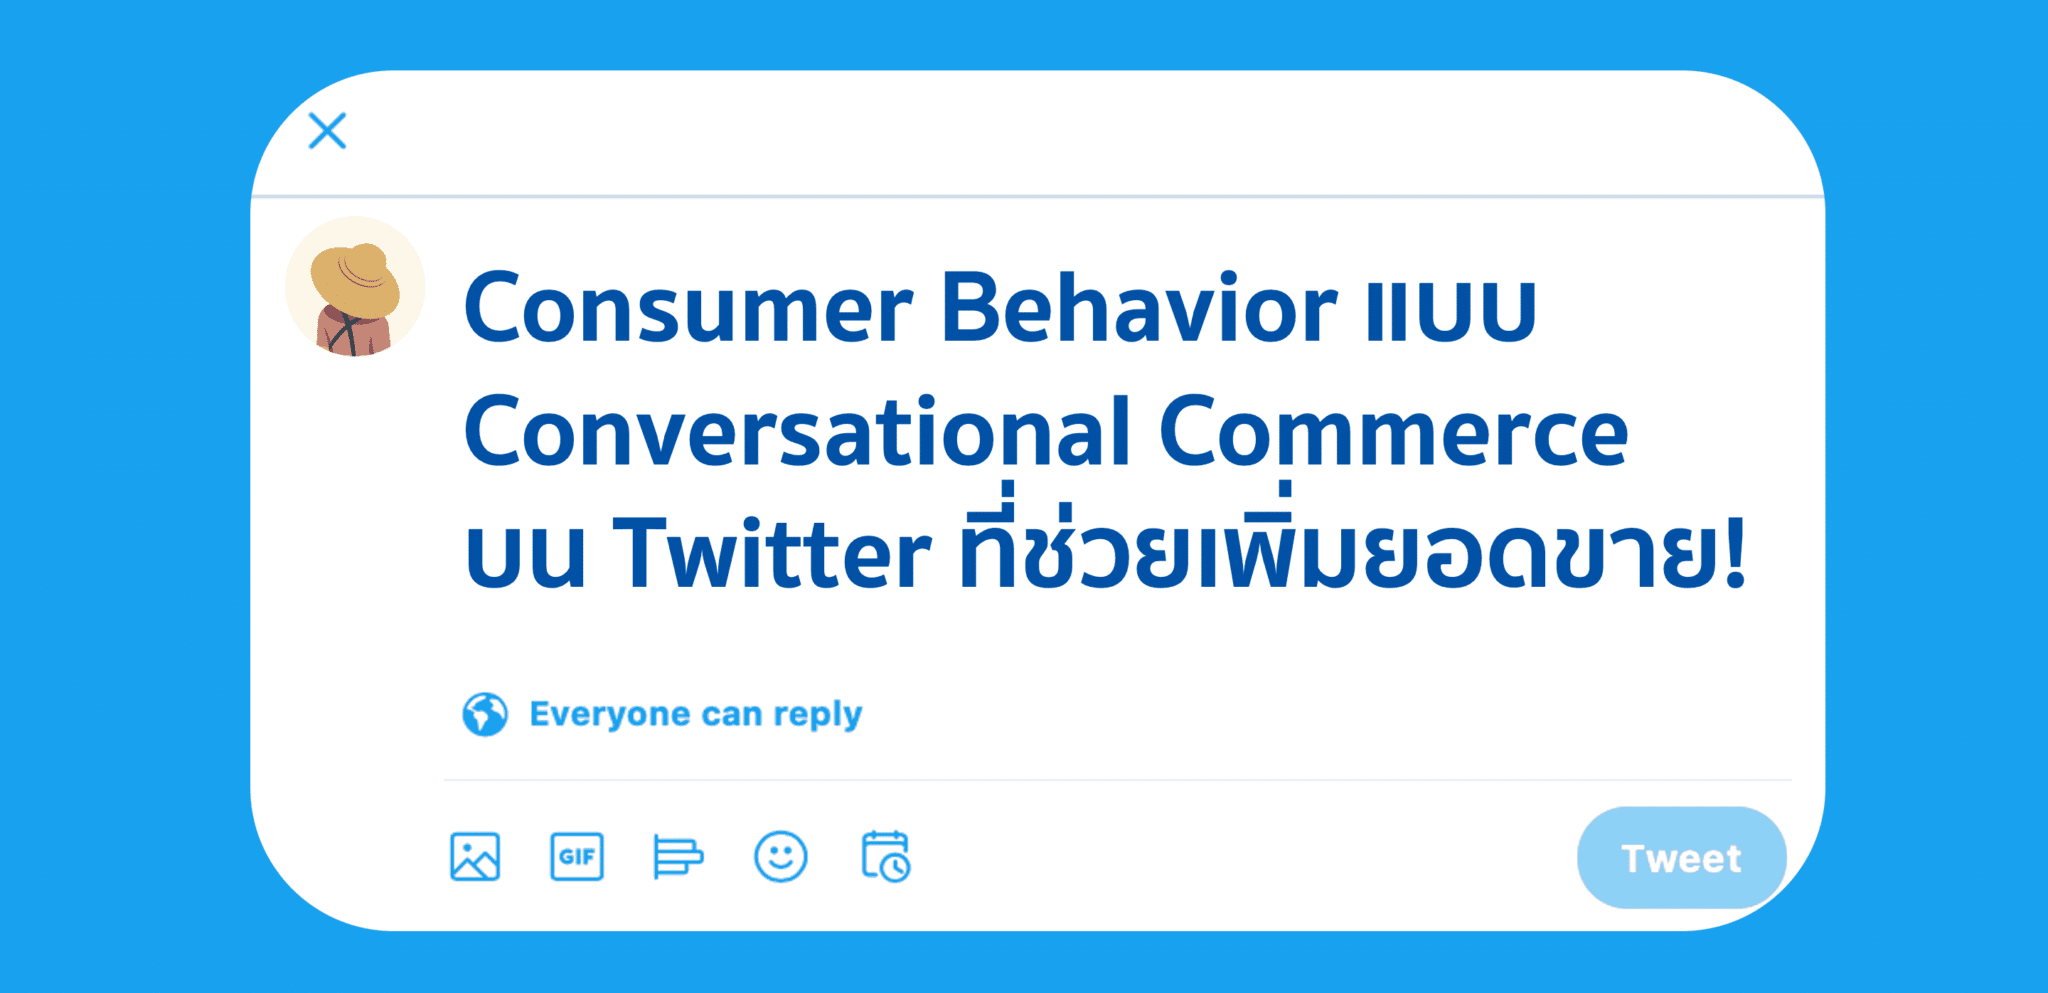 Conversational Commerce ในรูปแบบของ Twitter TH